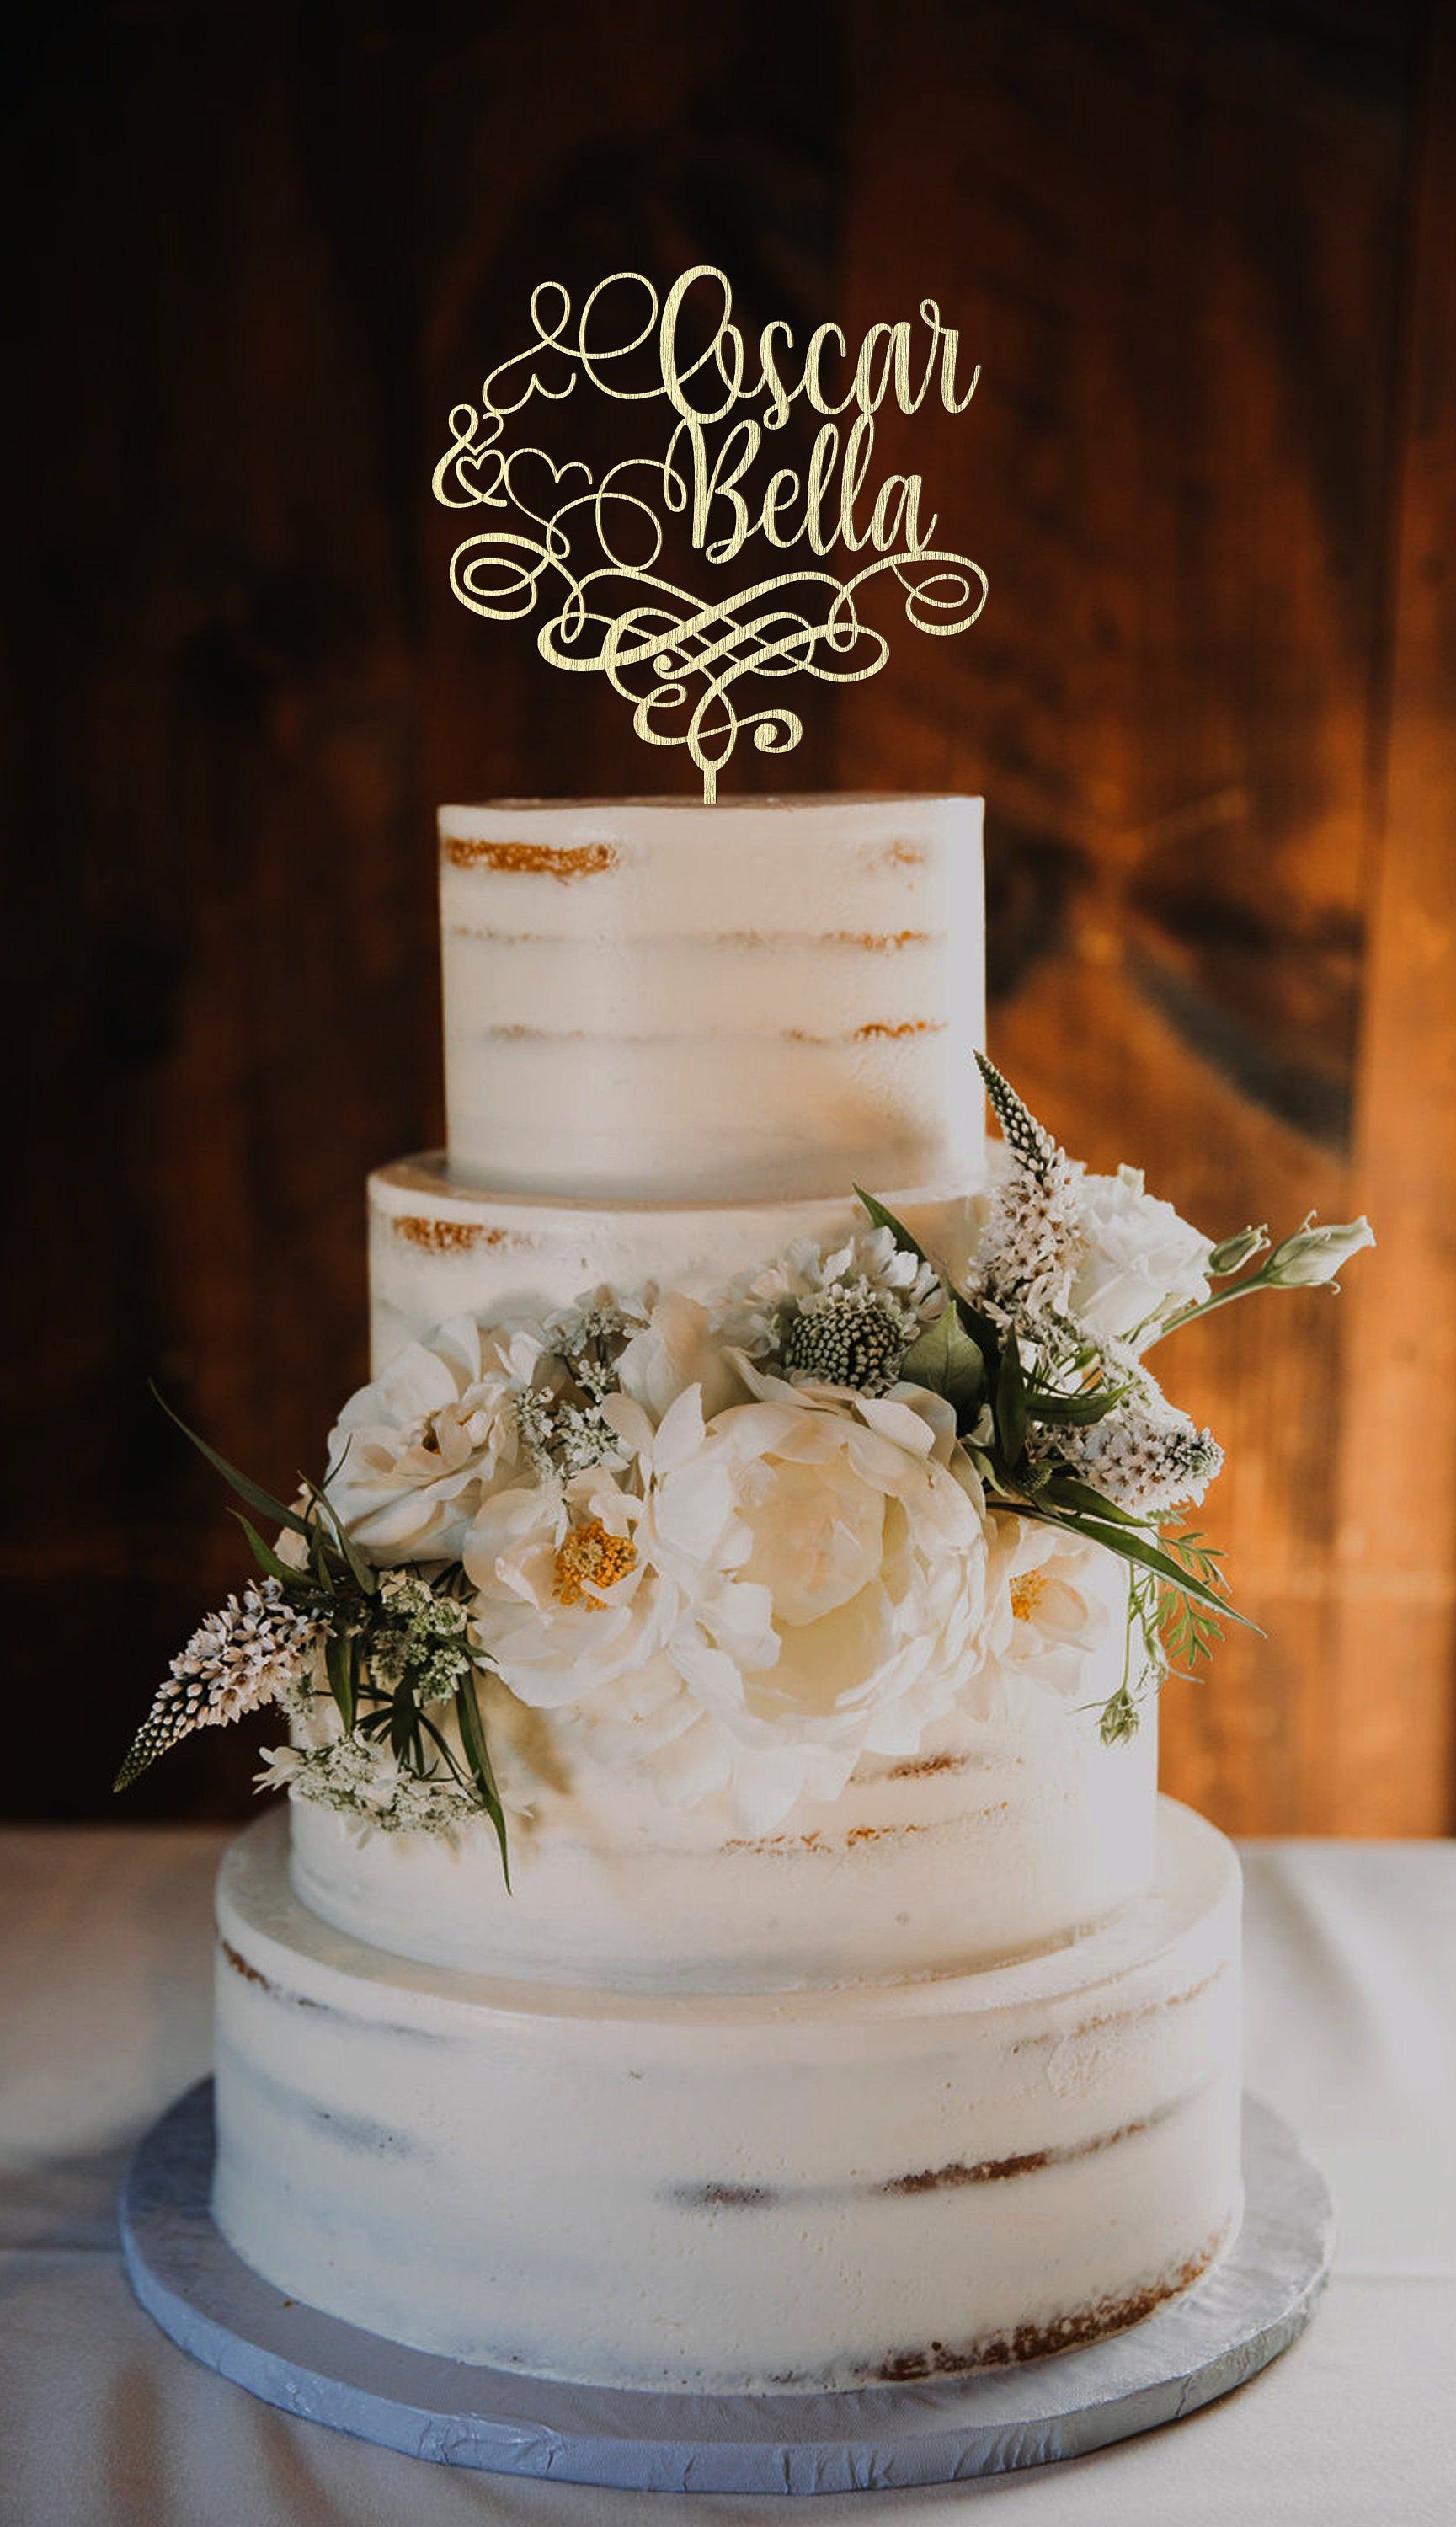 Top 21 Small but Exquisite Wedding Cake Designs for your Big Day |  WeddingBazaar